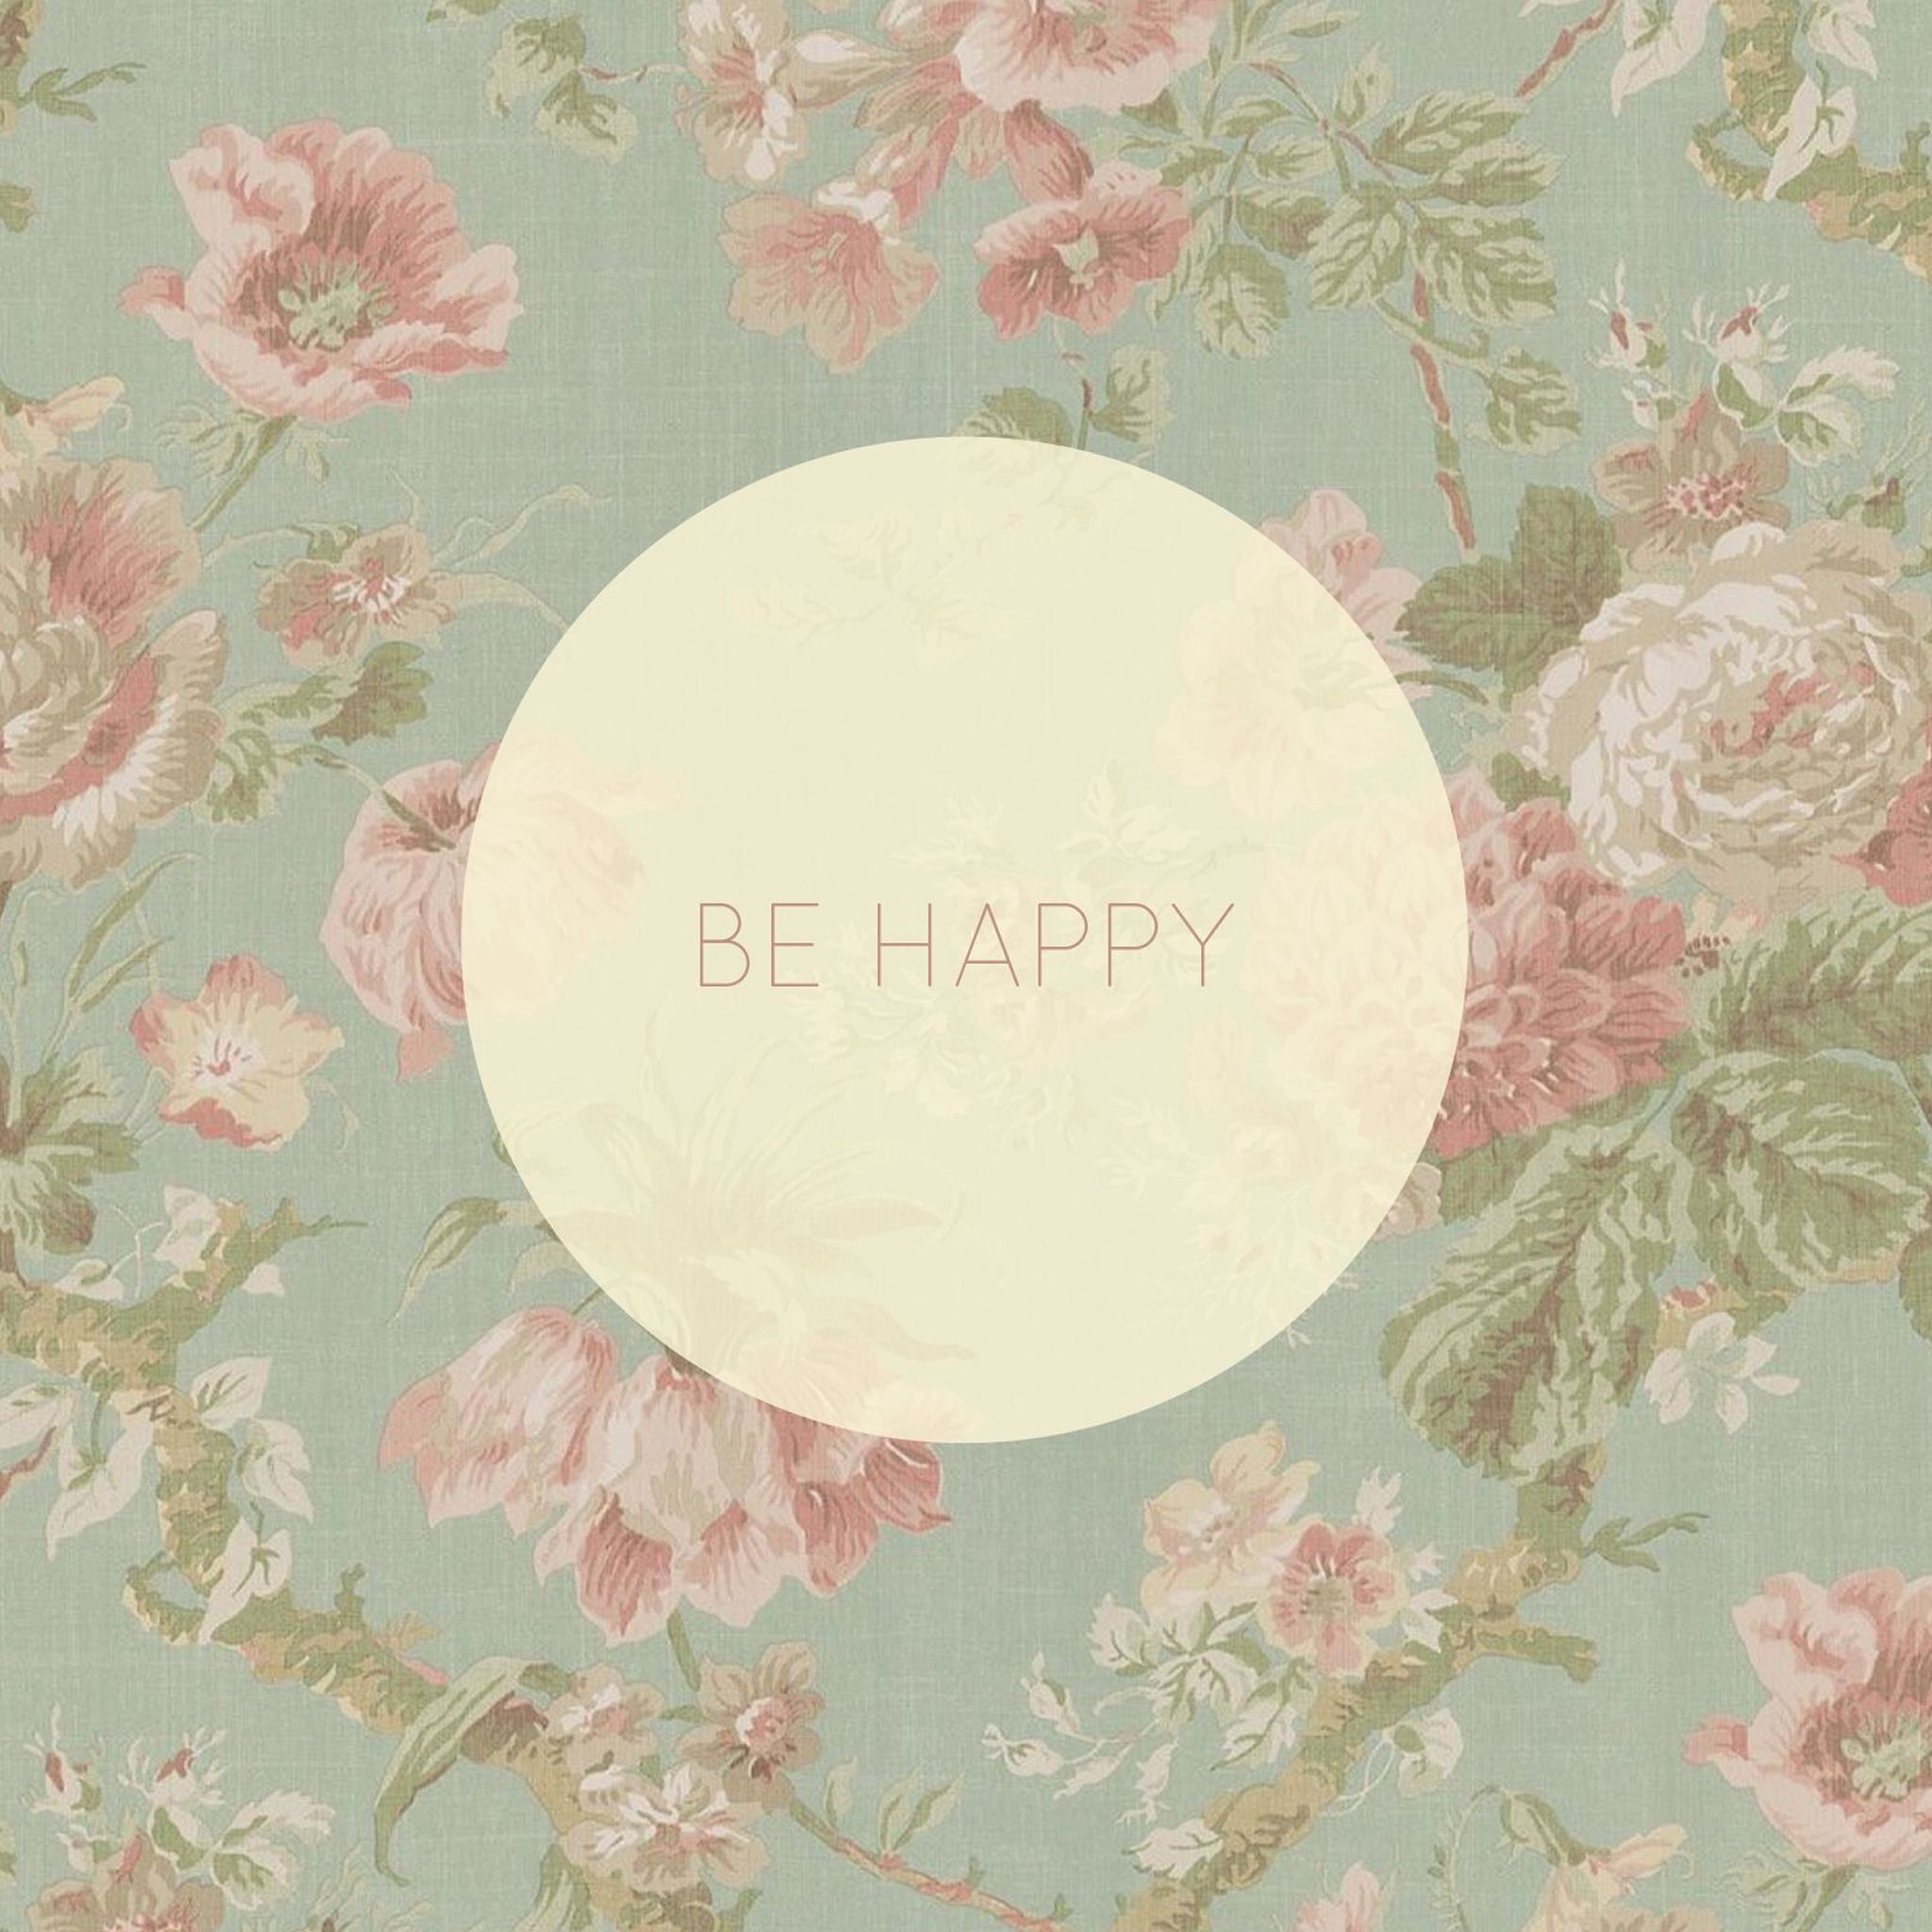 Be Happy Vintage Floral Pattern iPad Air Wallpaper Free Download